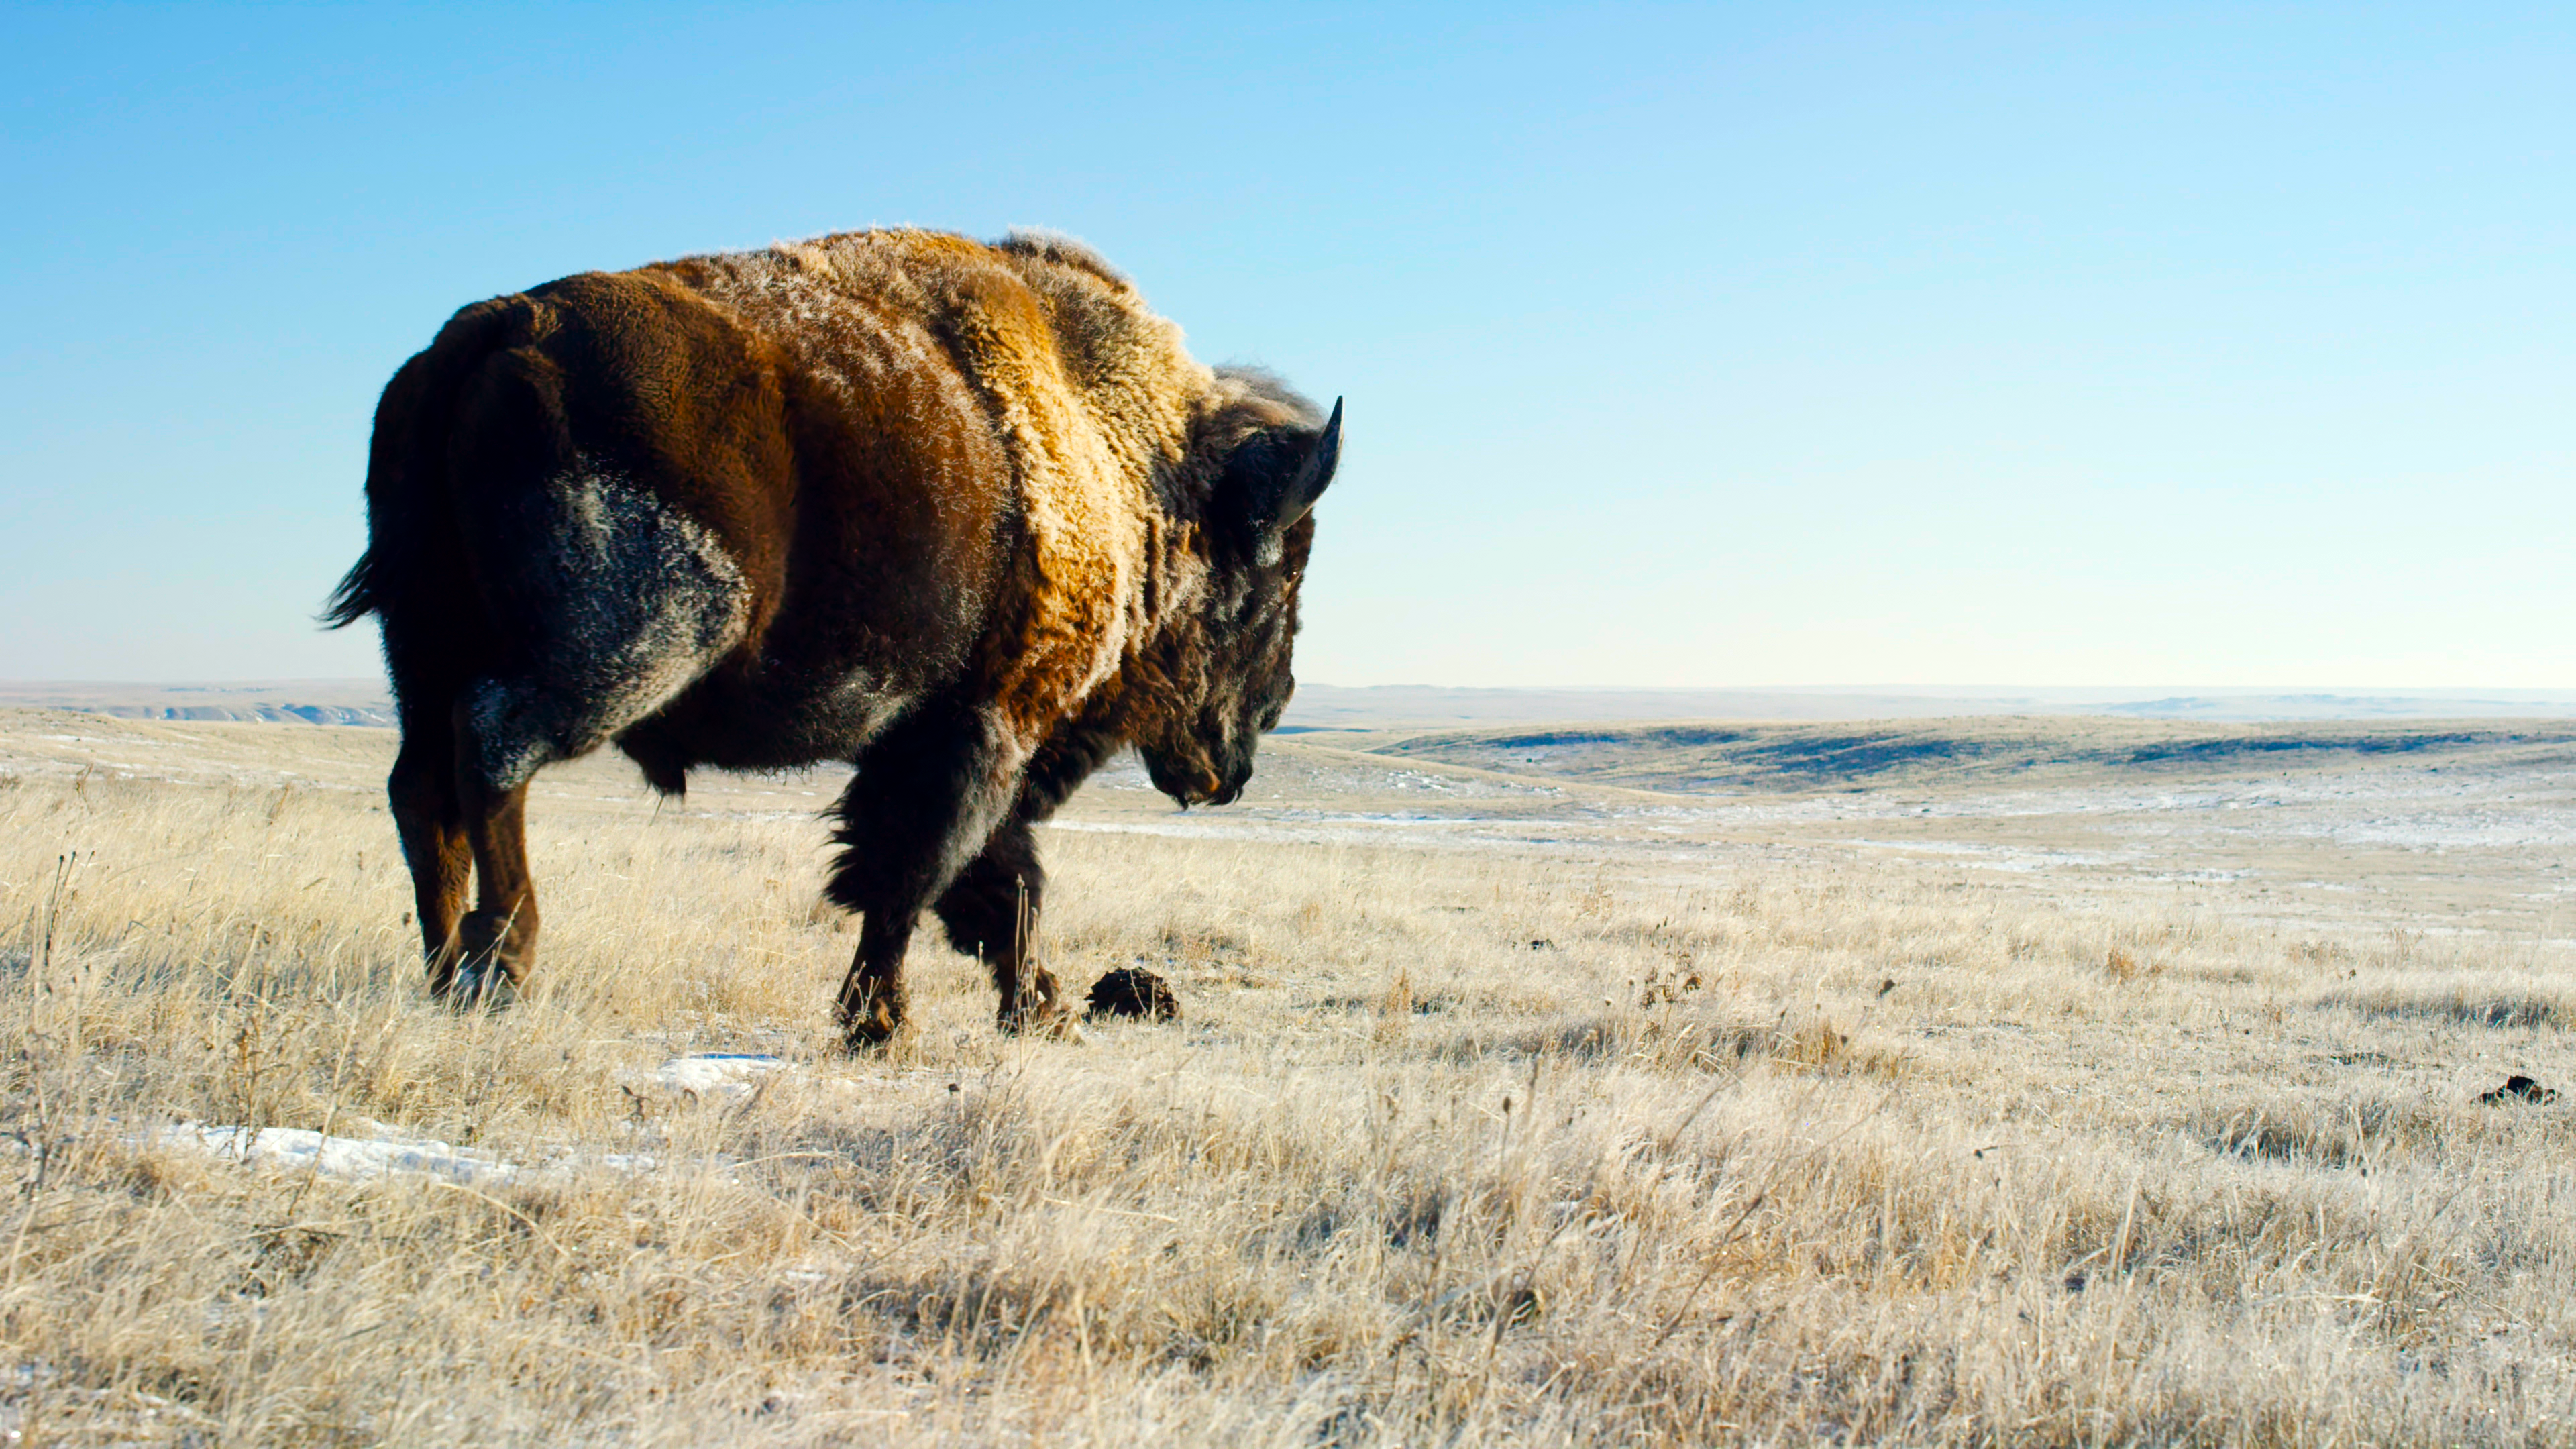 General 3840x2160 Planet Earth II TV series film stills BBC bison grass sky animals horns nature